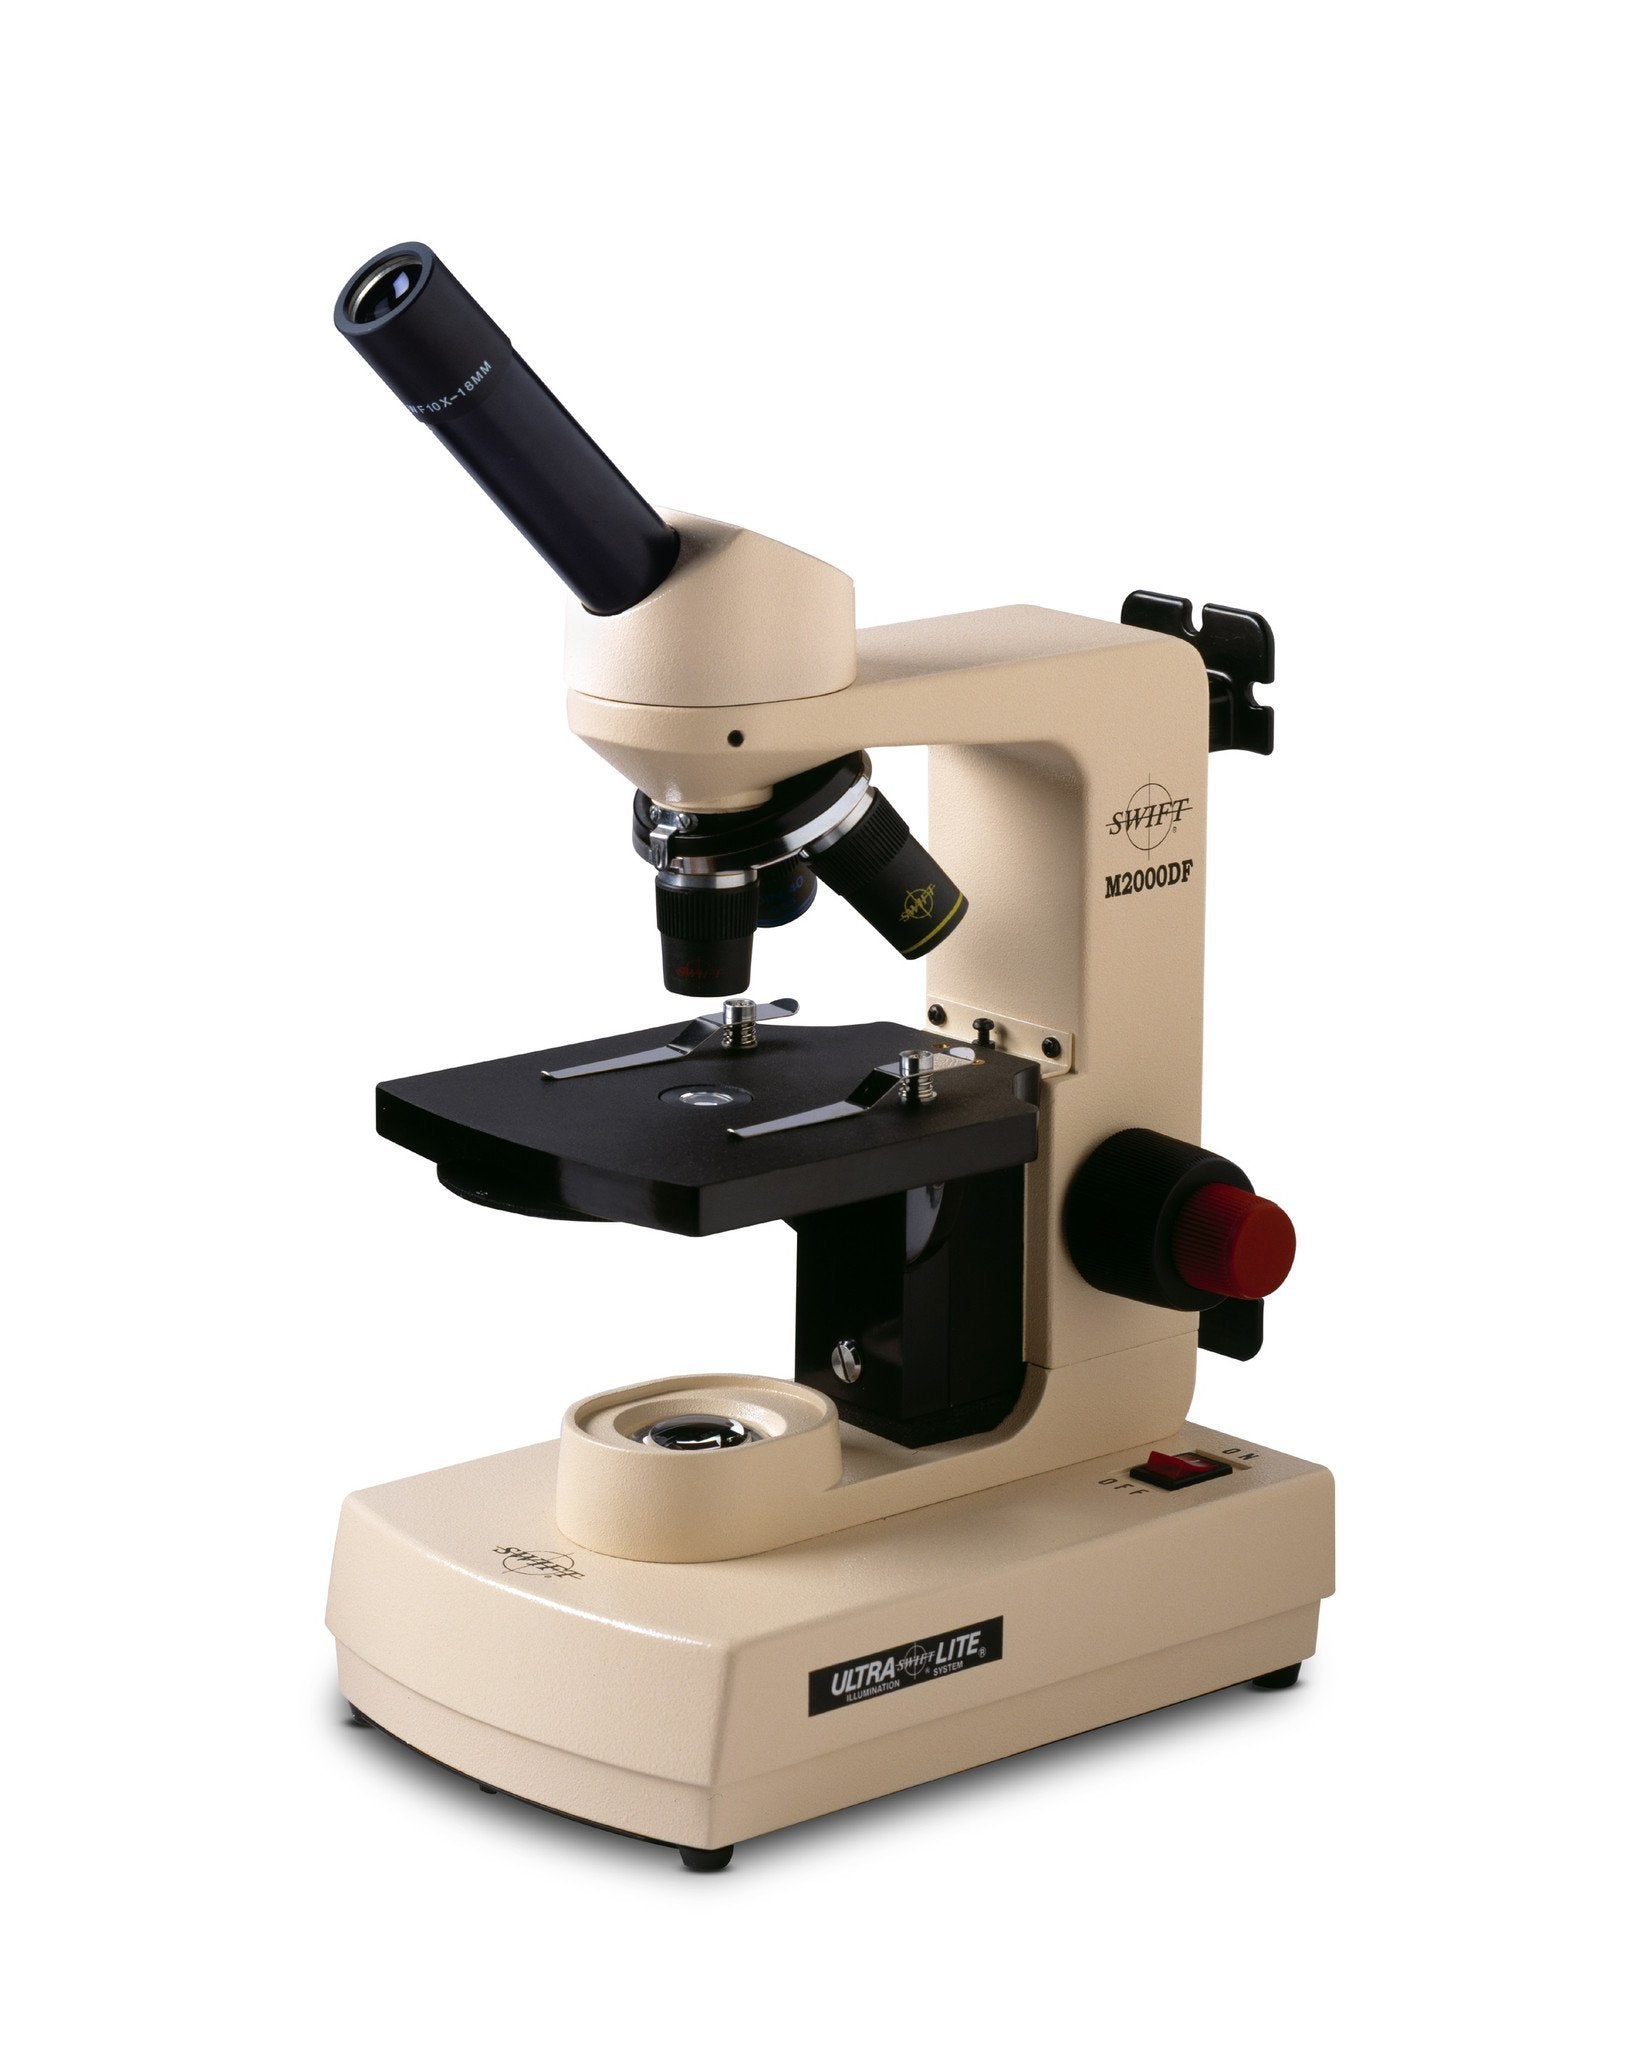 Swift M2000DF Monocular Microscope